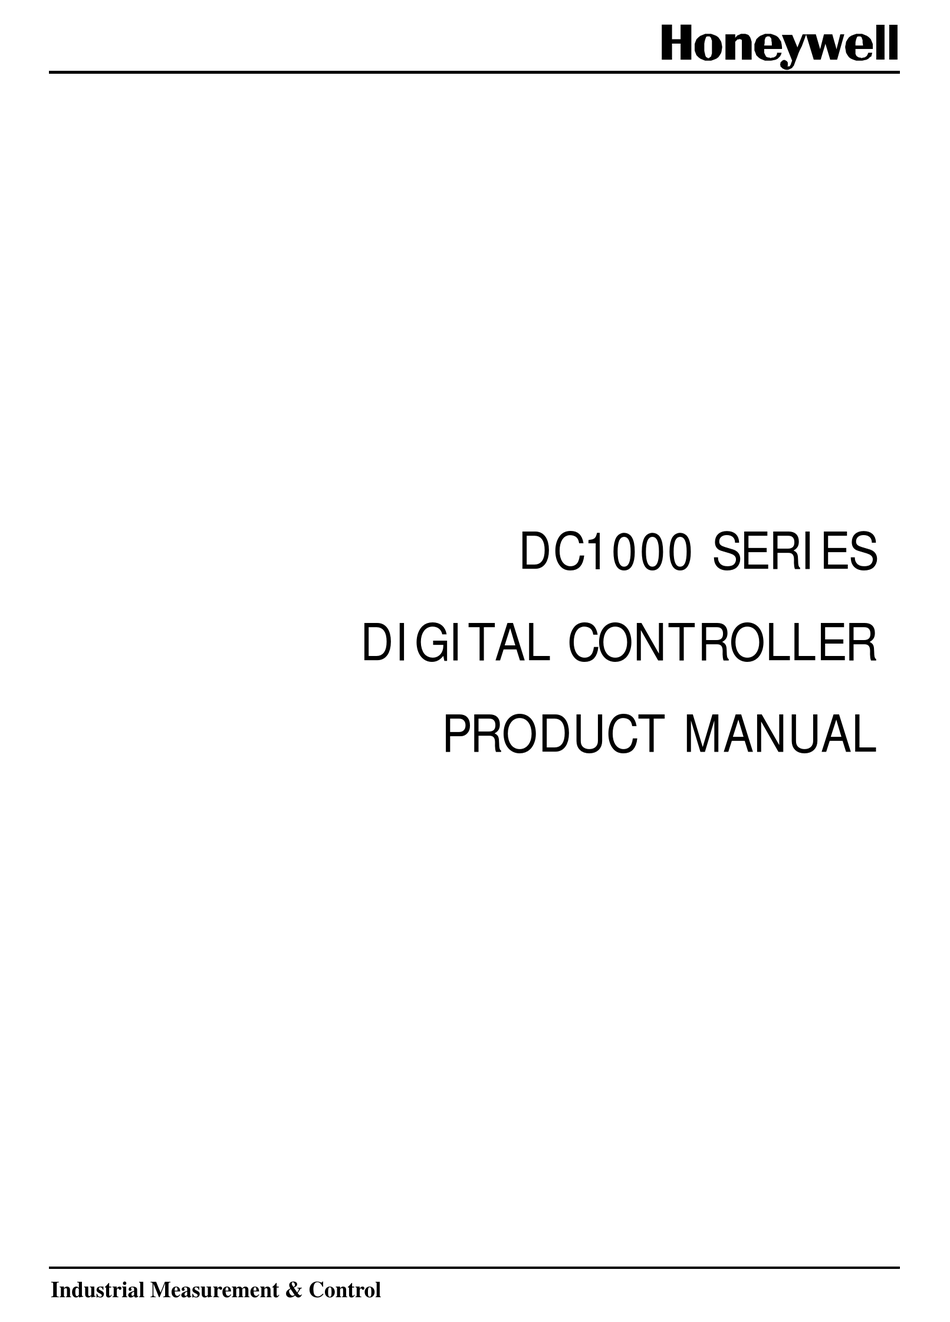 honeywell-dc1000-series-controller-product-manual-manualslib